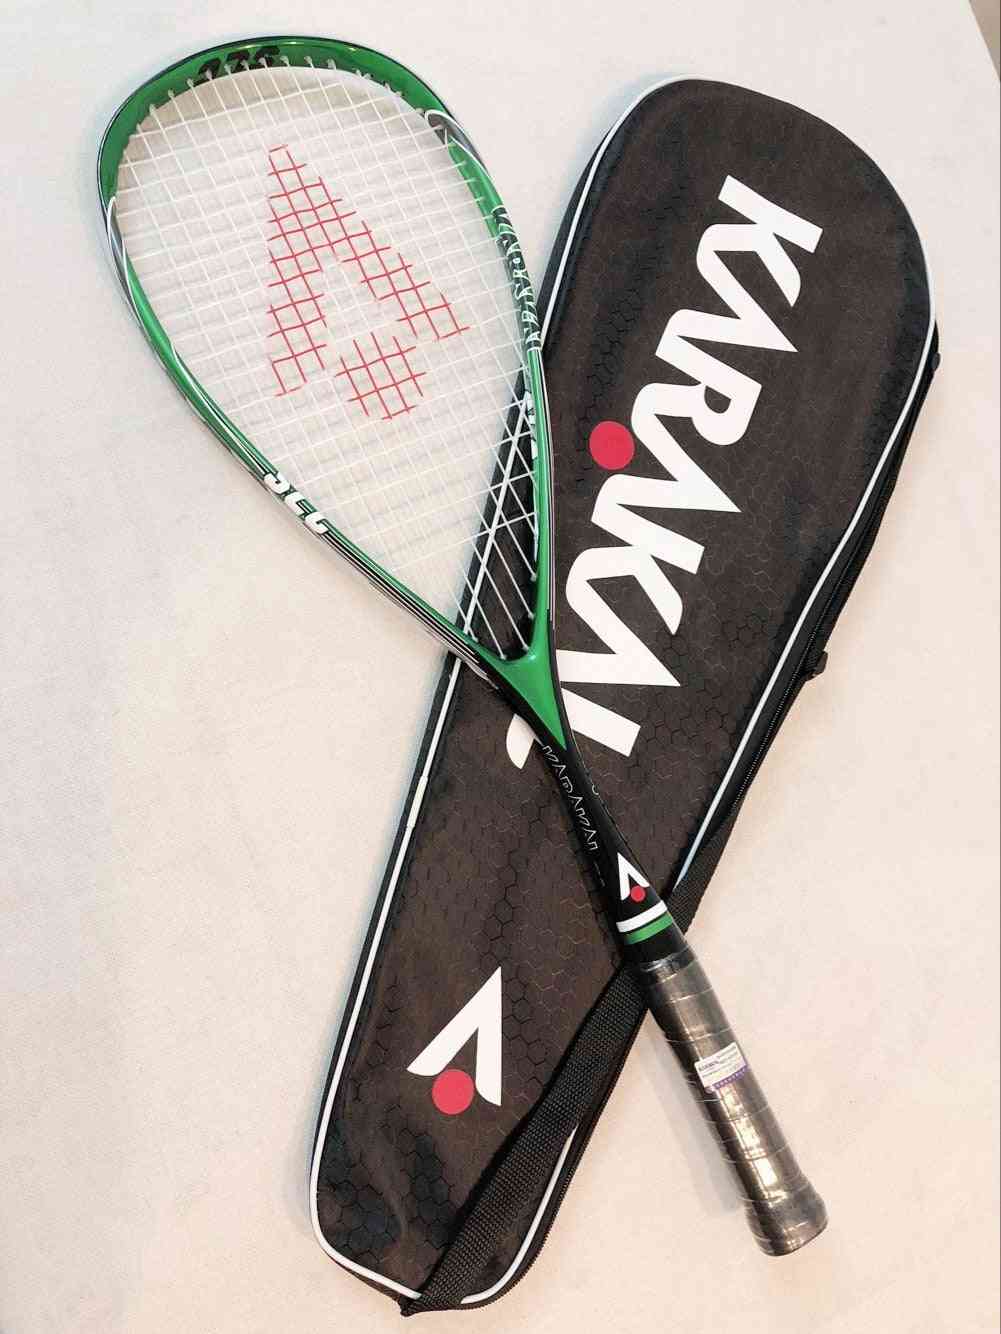 Sport Training Carbon Fiber Material Squash Racket